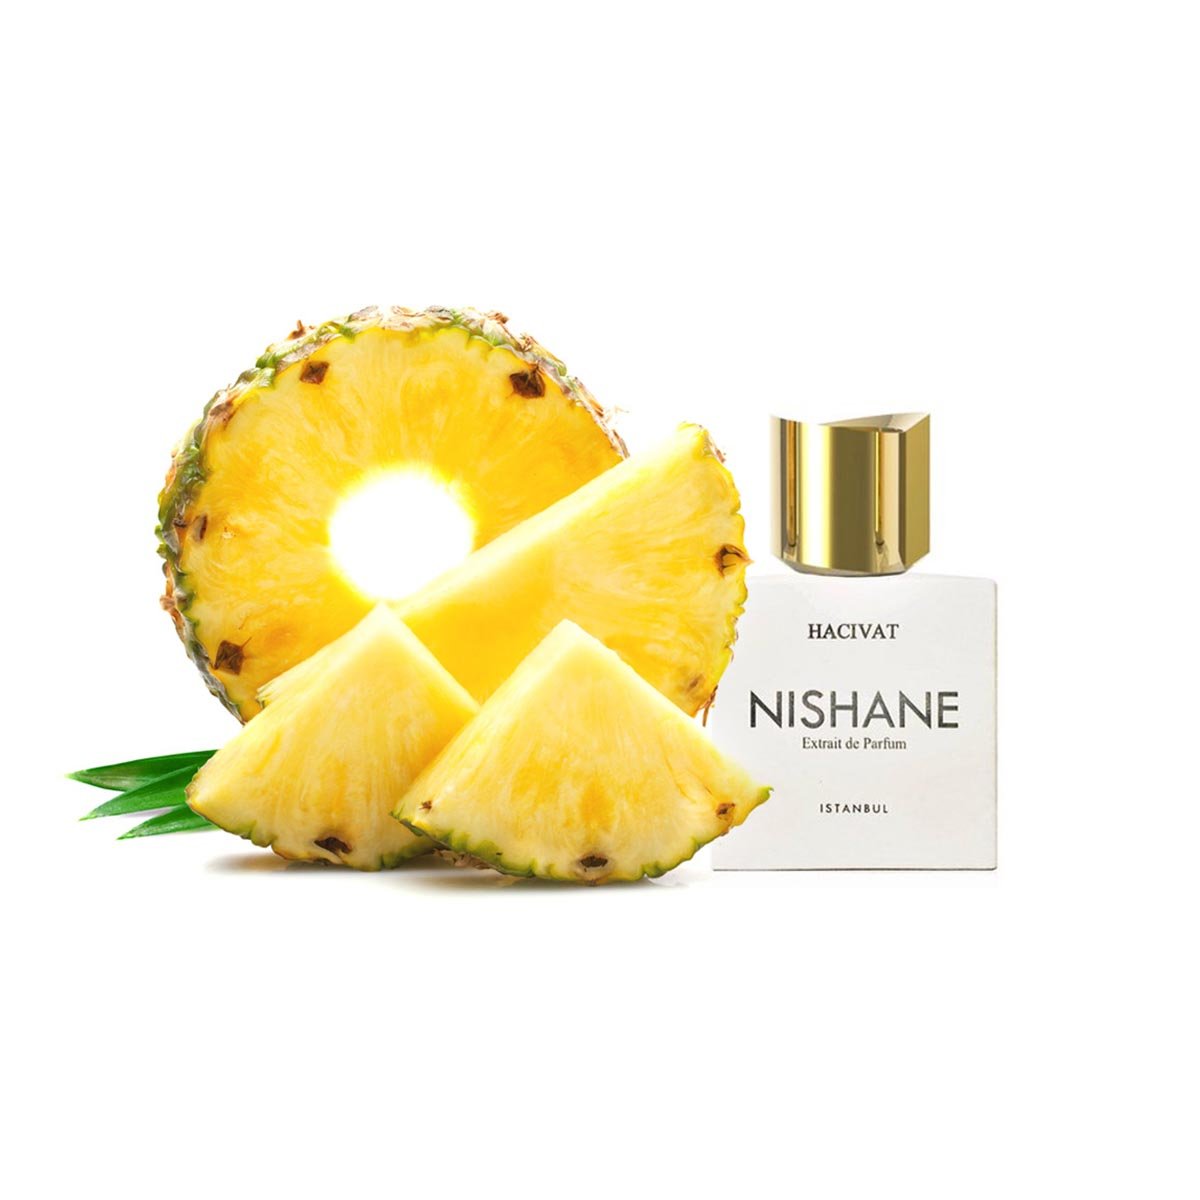 Nishane Hacivat Extrait de Parfum | My Perfume Shop Australia